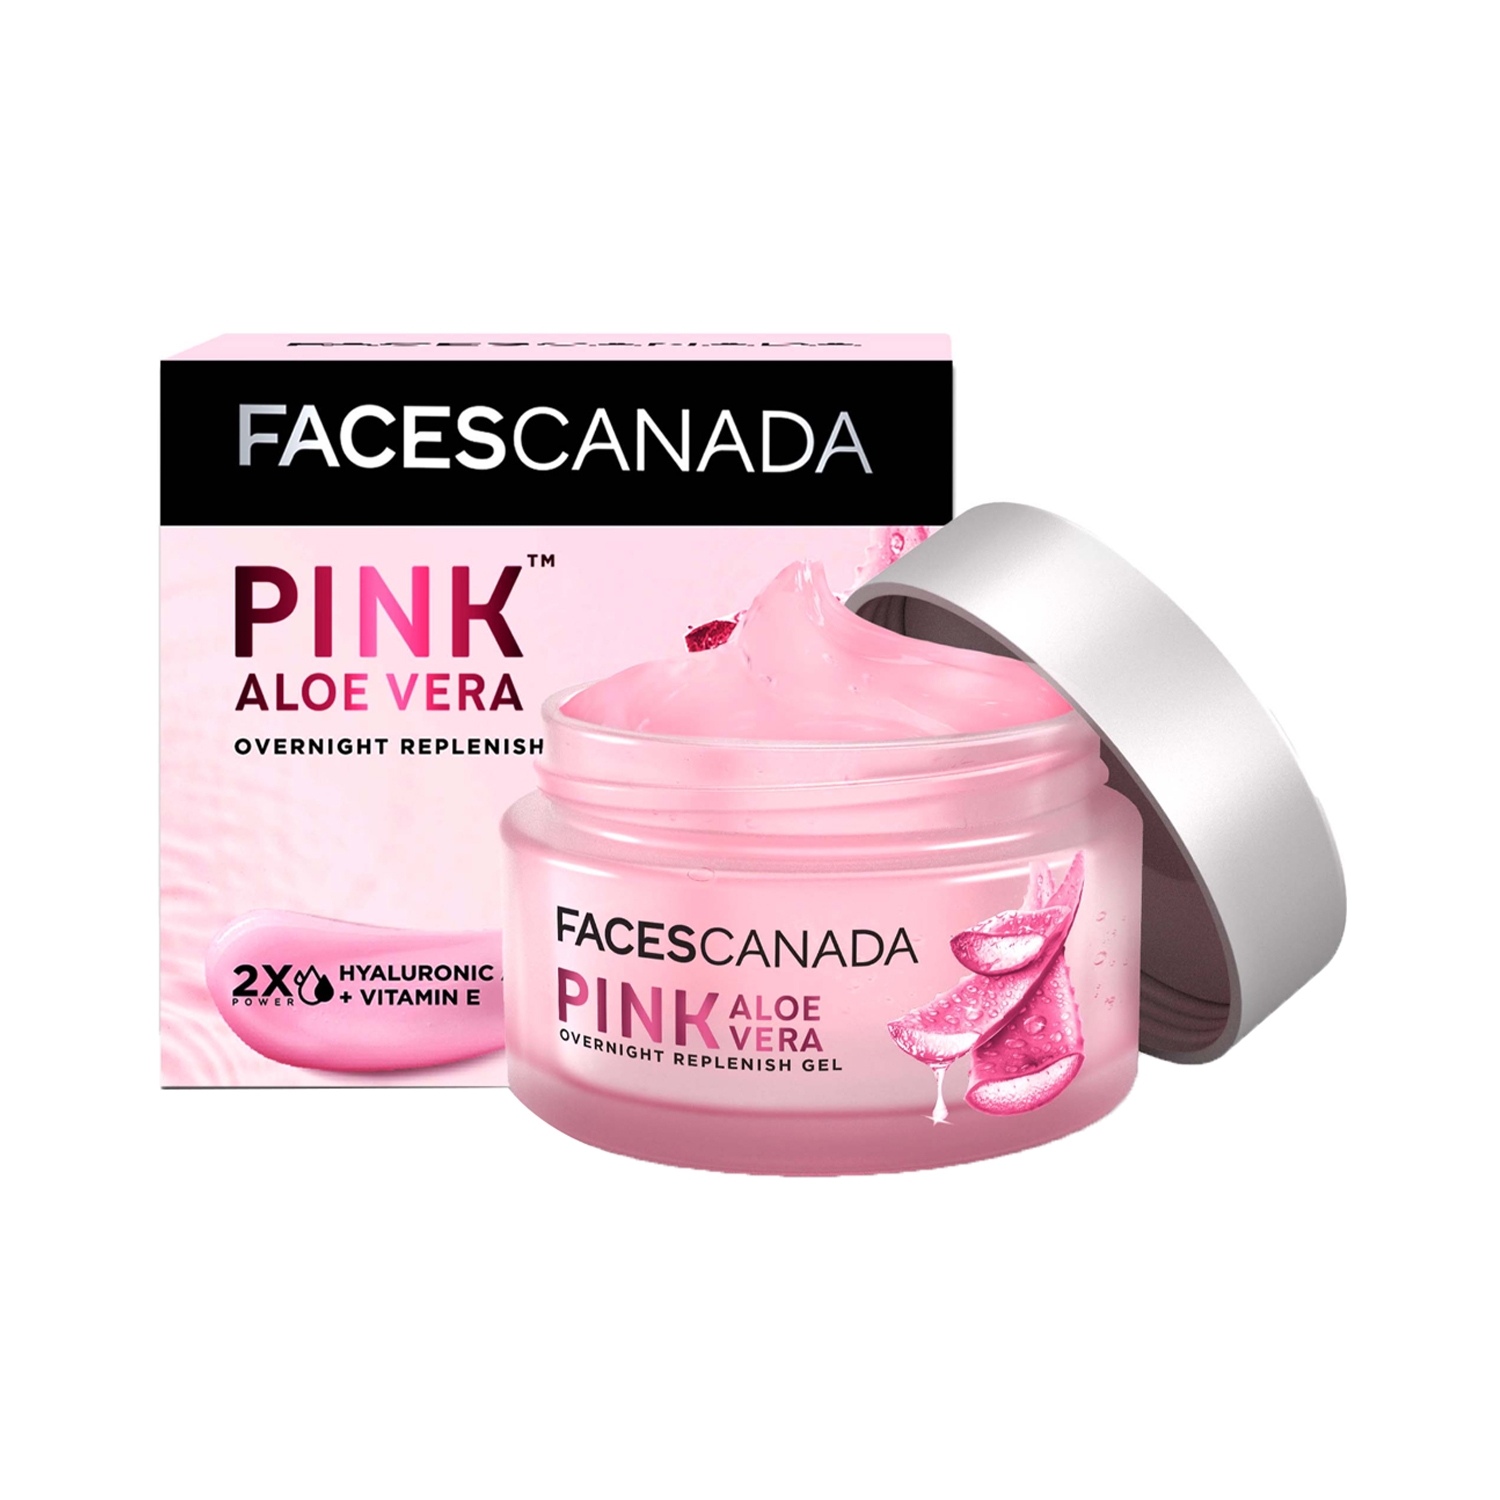 Faces Canada | Faces Canada Pink Aloe Vera Overnight Replenish Gel (50g)